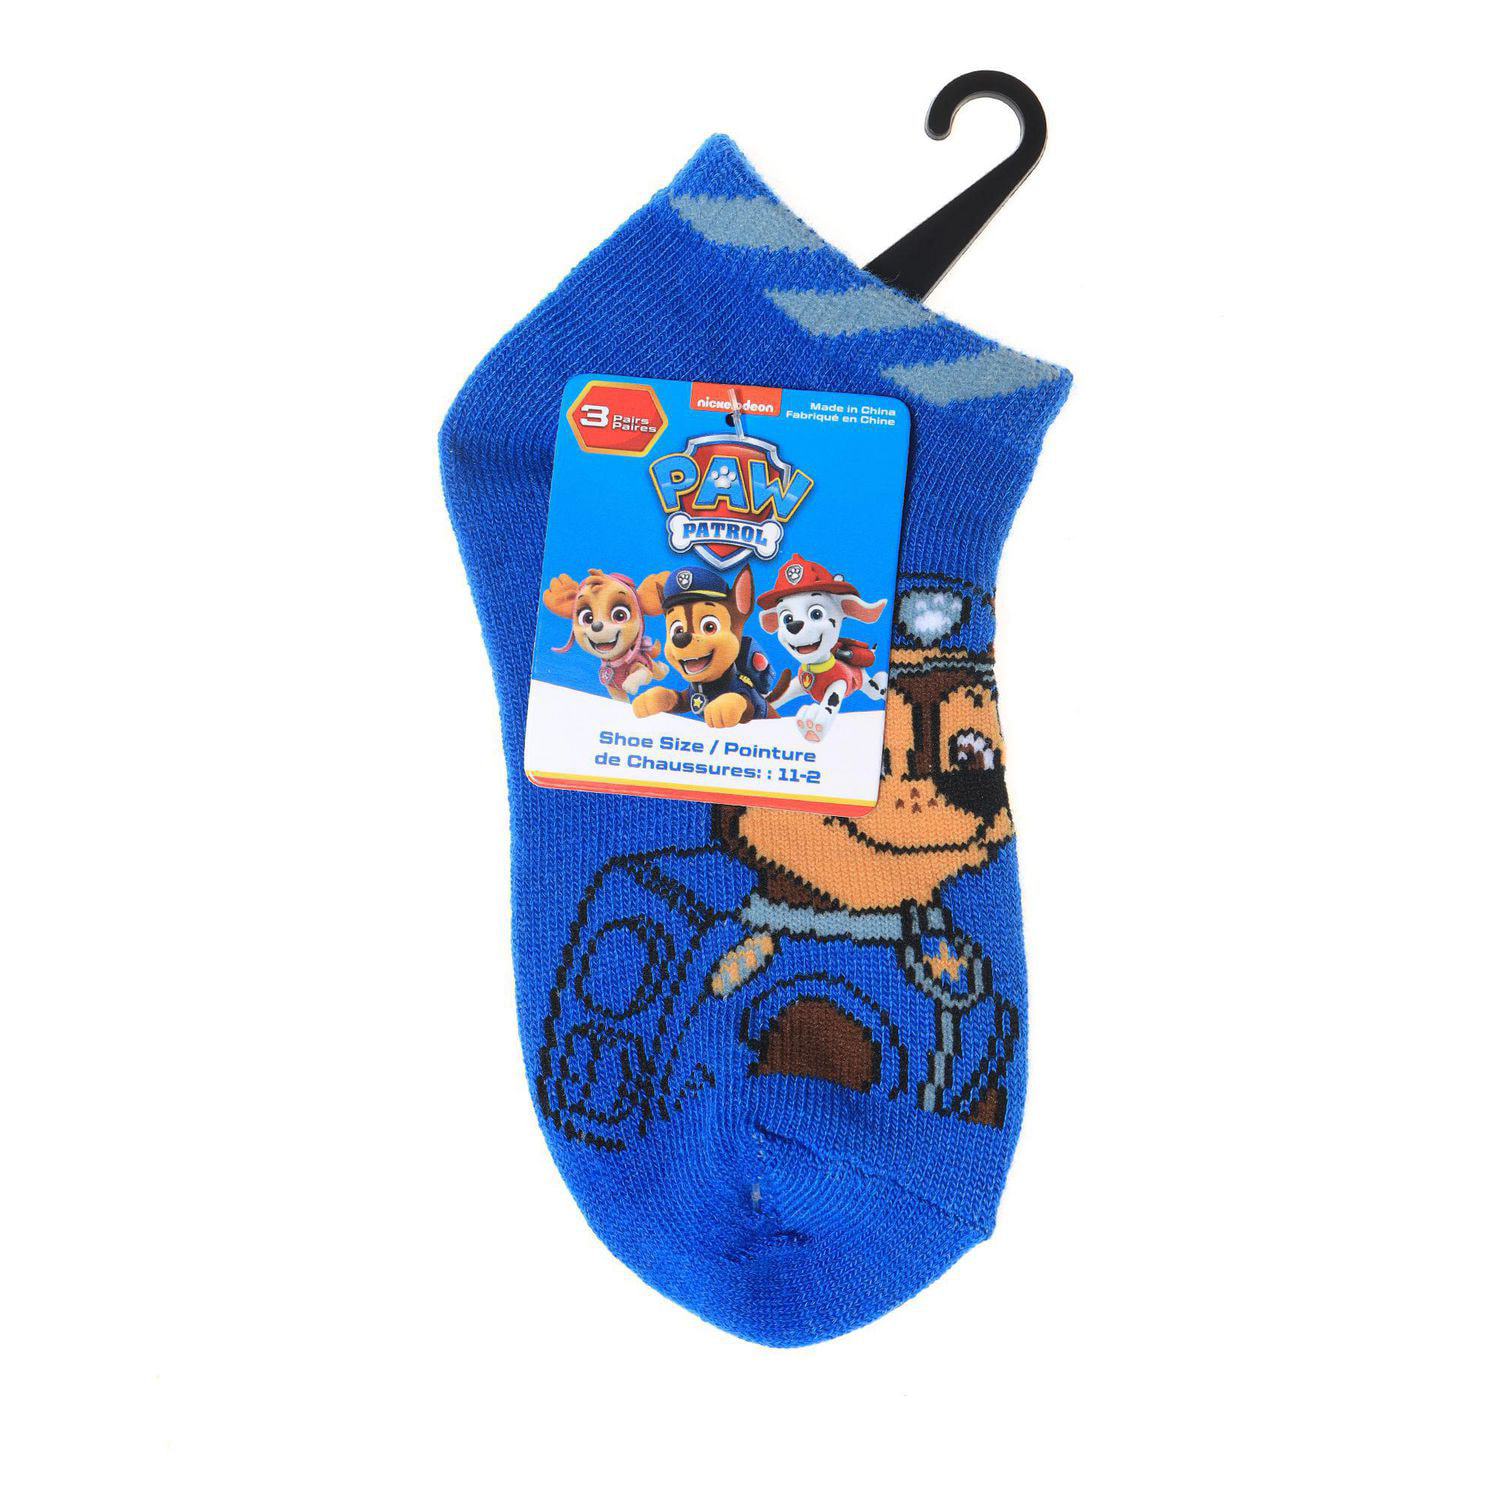 Paw Patrol Boy's 3 Pack Socks, Size 11-2 